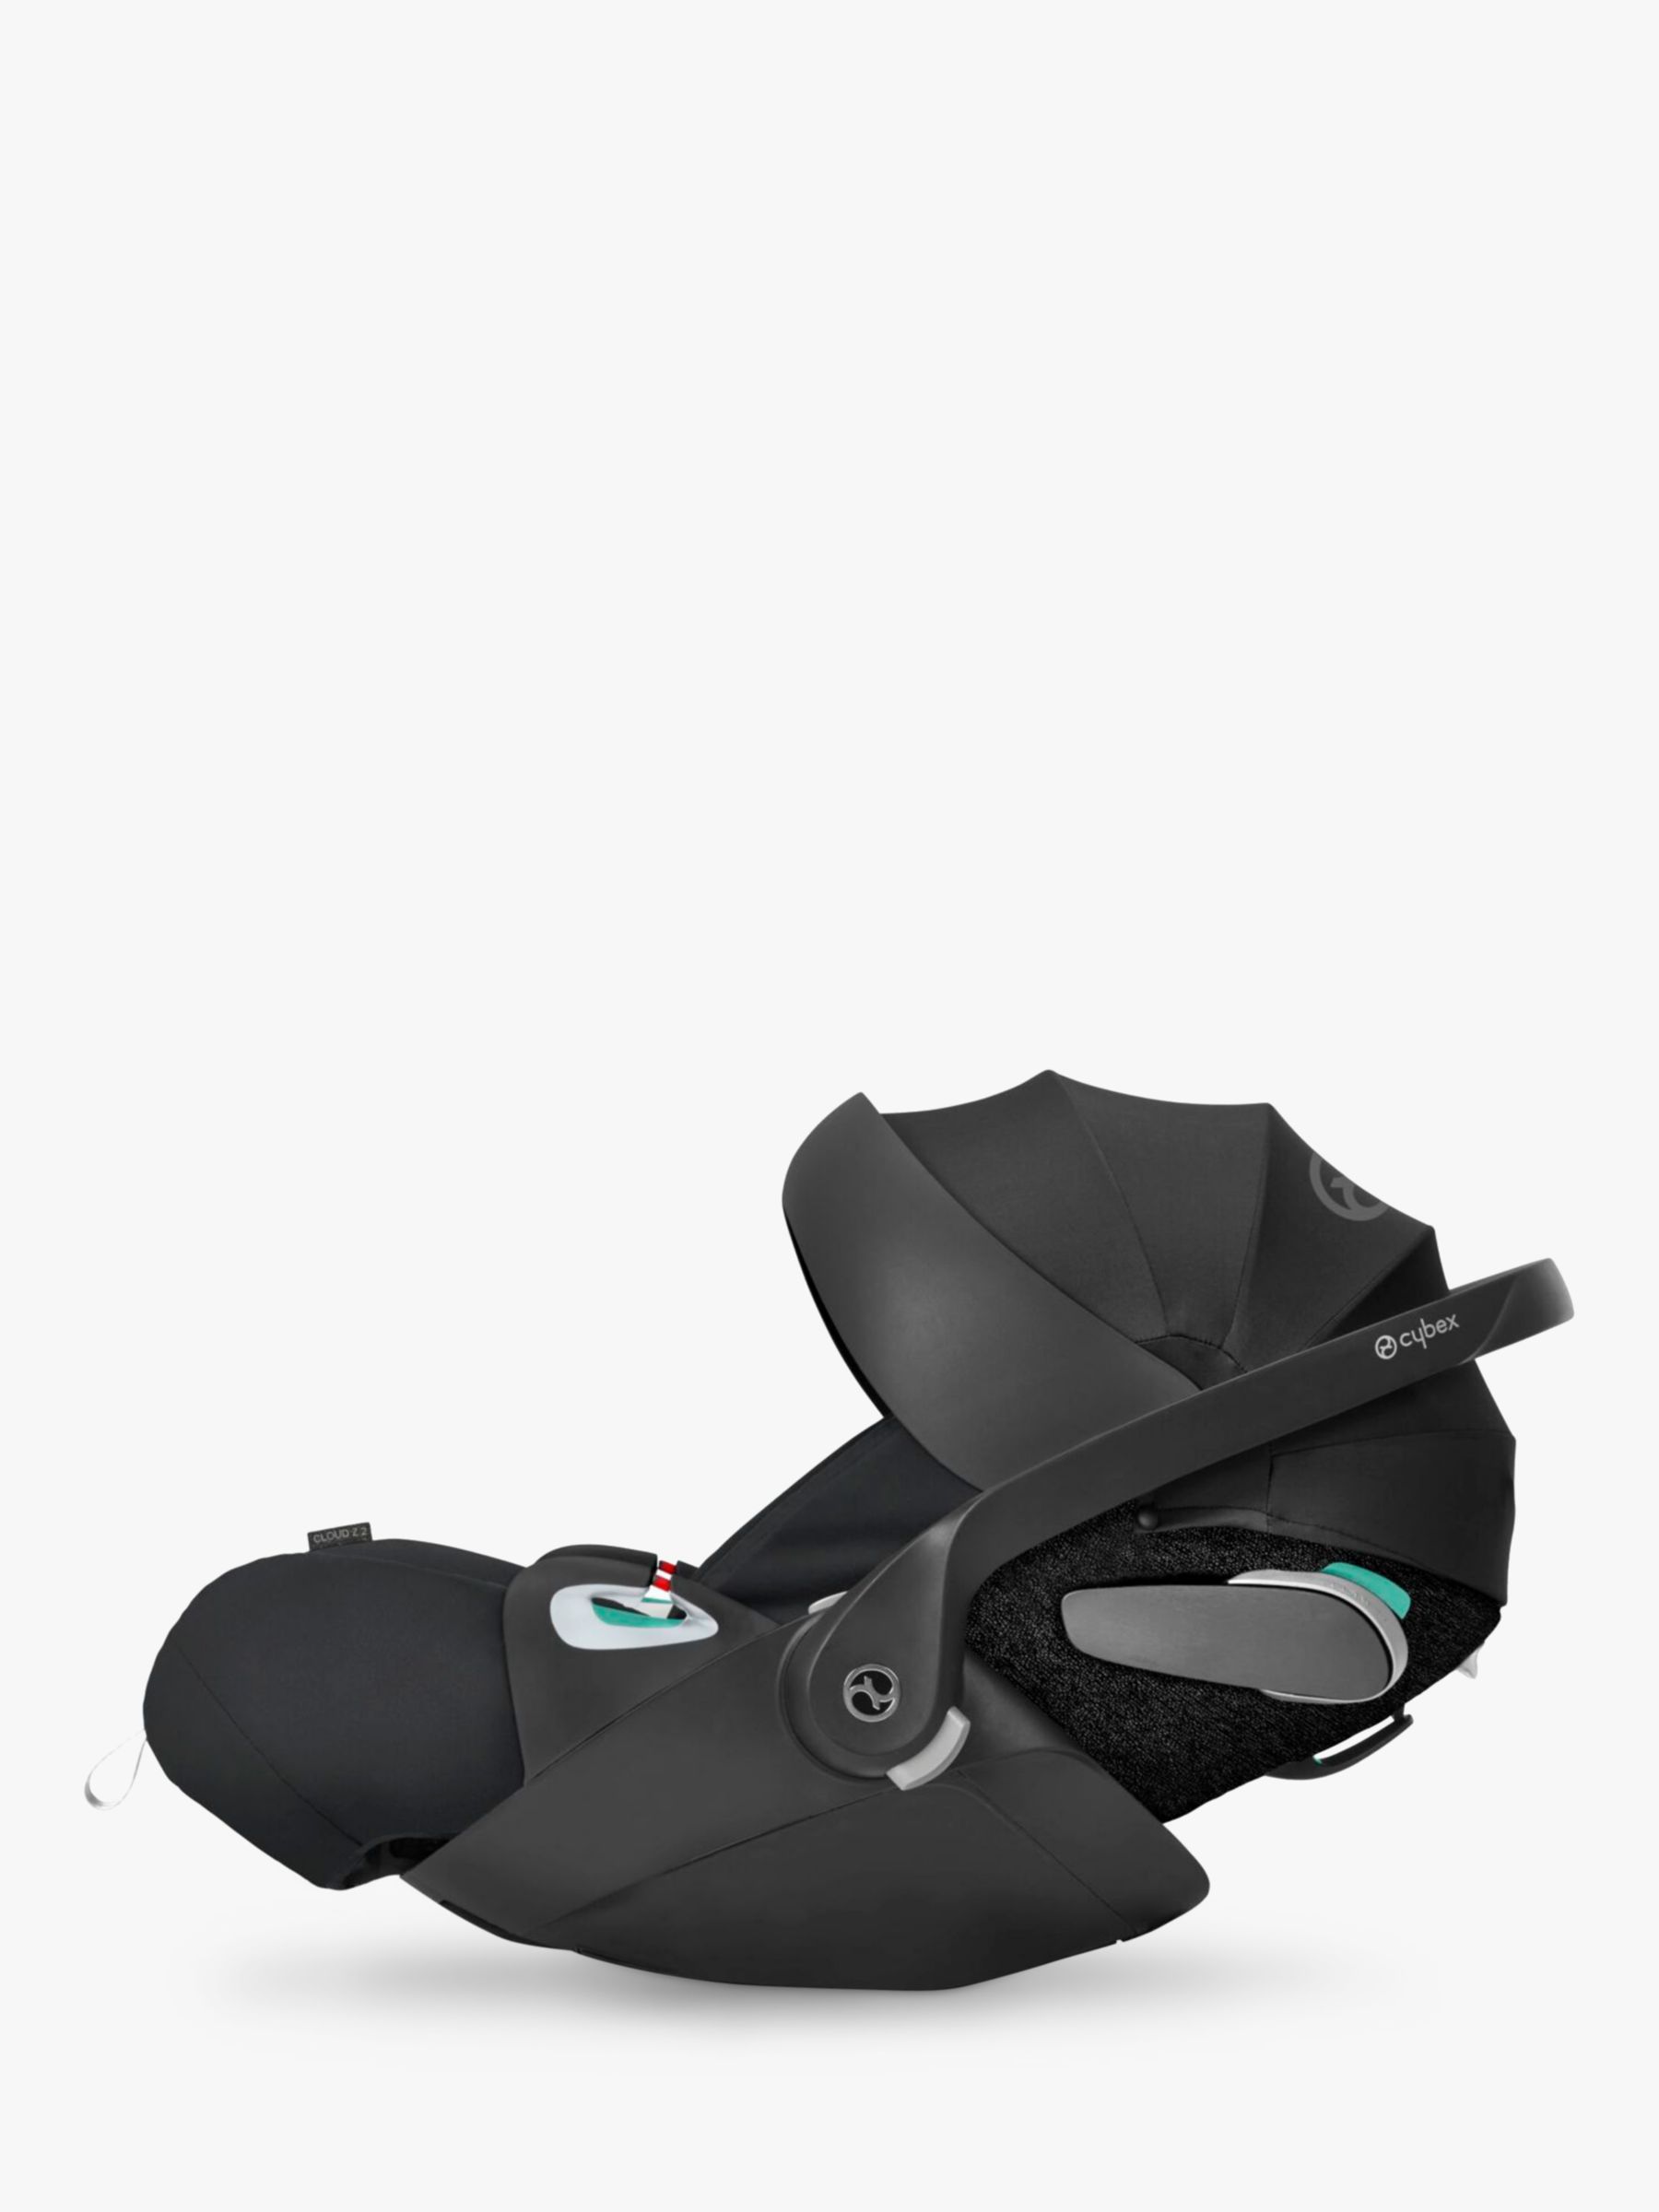 Cybex Cloud Z2 Rotating Baby Car Seat, Deep Black